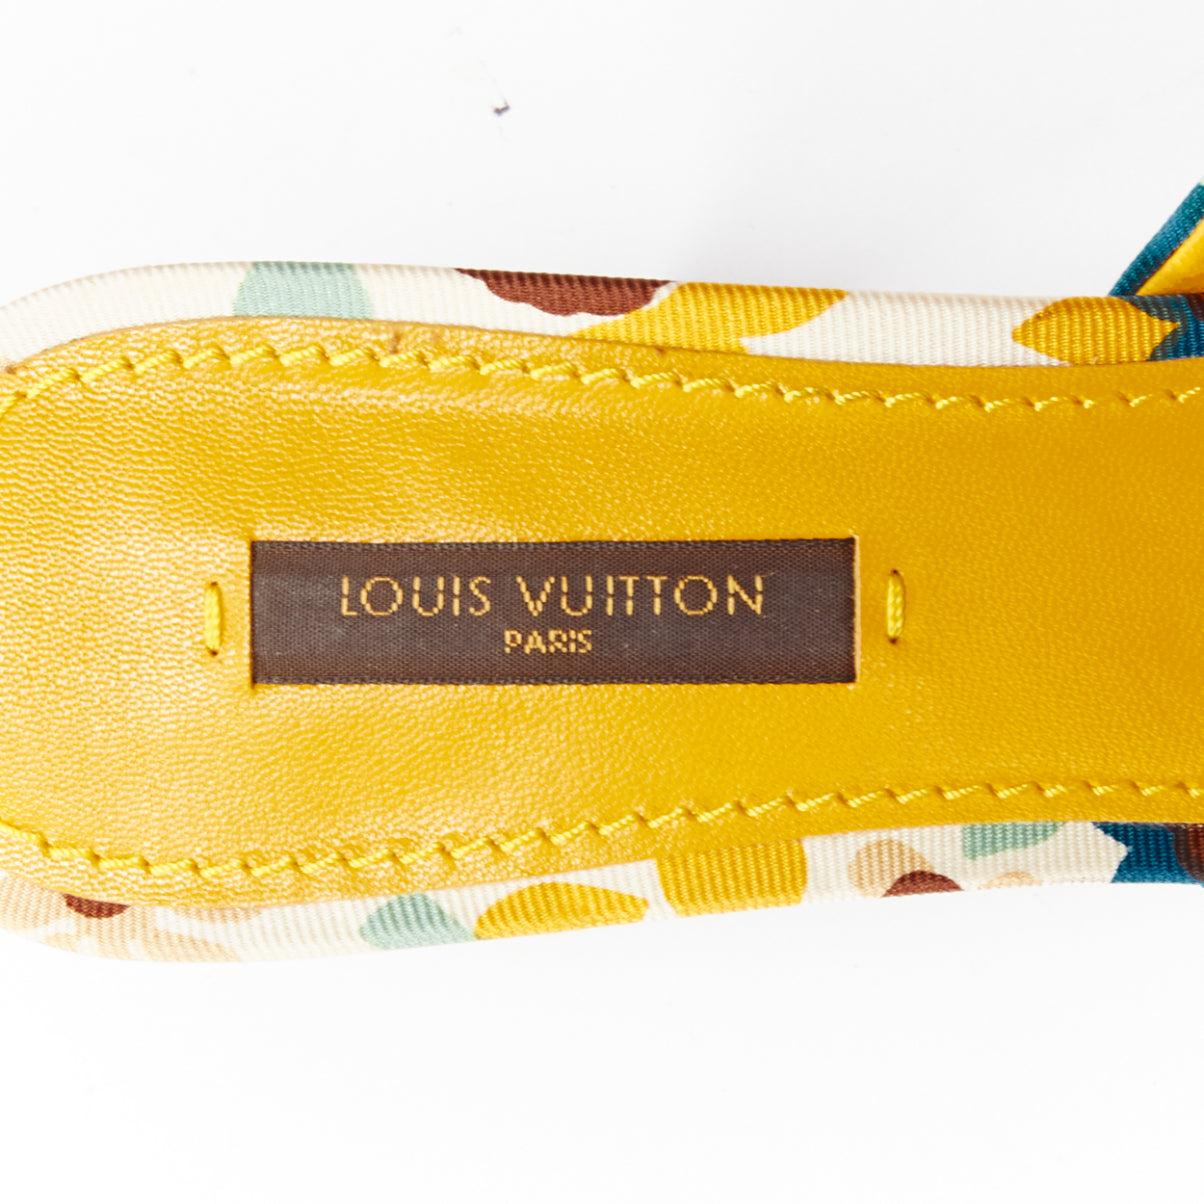 LOUIS VUITTON Vintage logo floral motif print open toe kittn heel mule EU37 For Sale 5